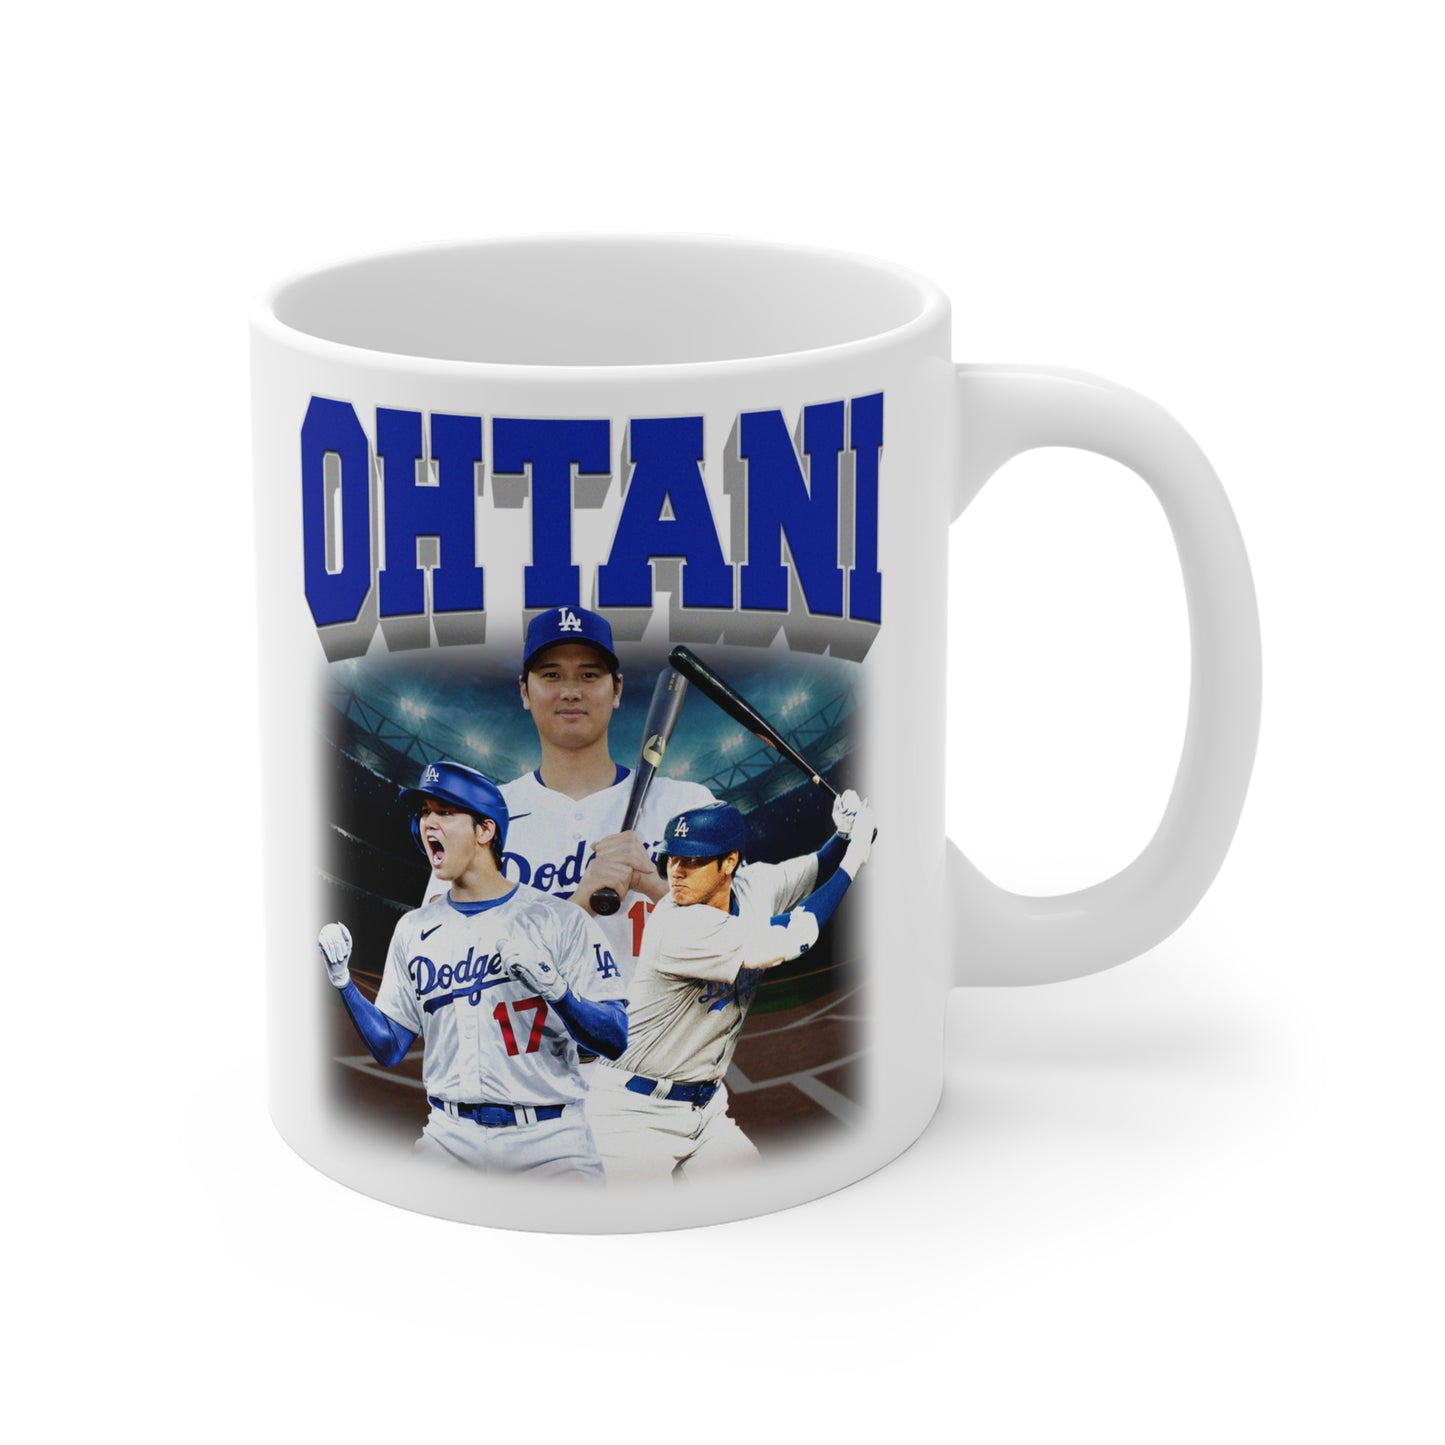 Shohei Ohtani Tribute 11oz Ceramic Mug - Perfect for Baseball Fans